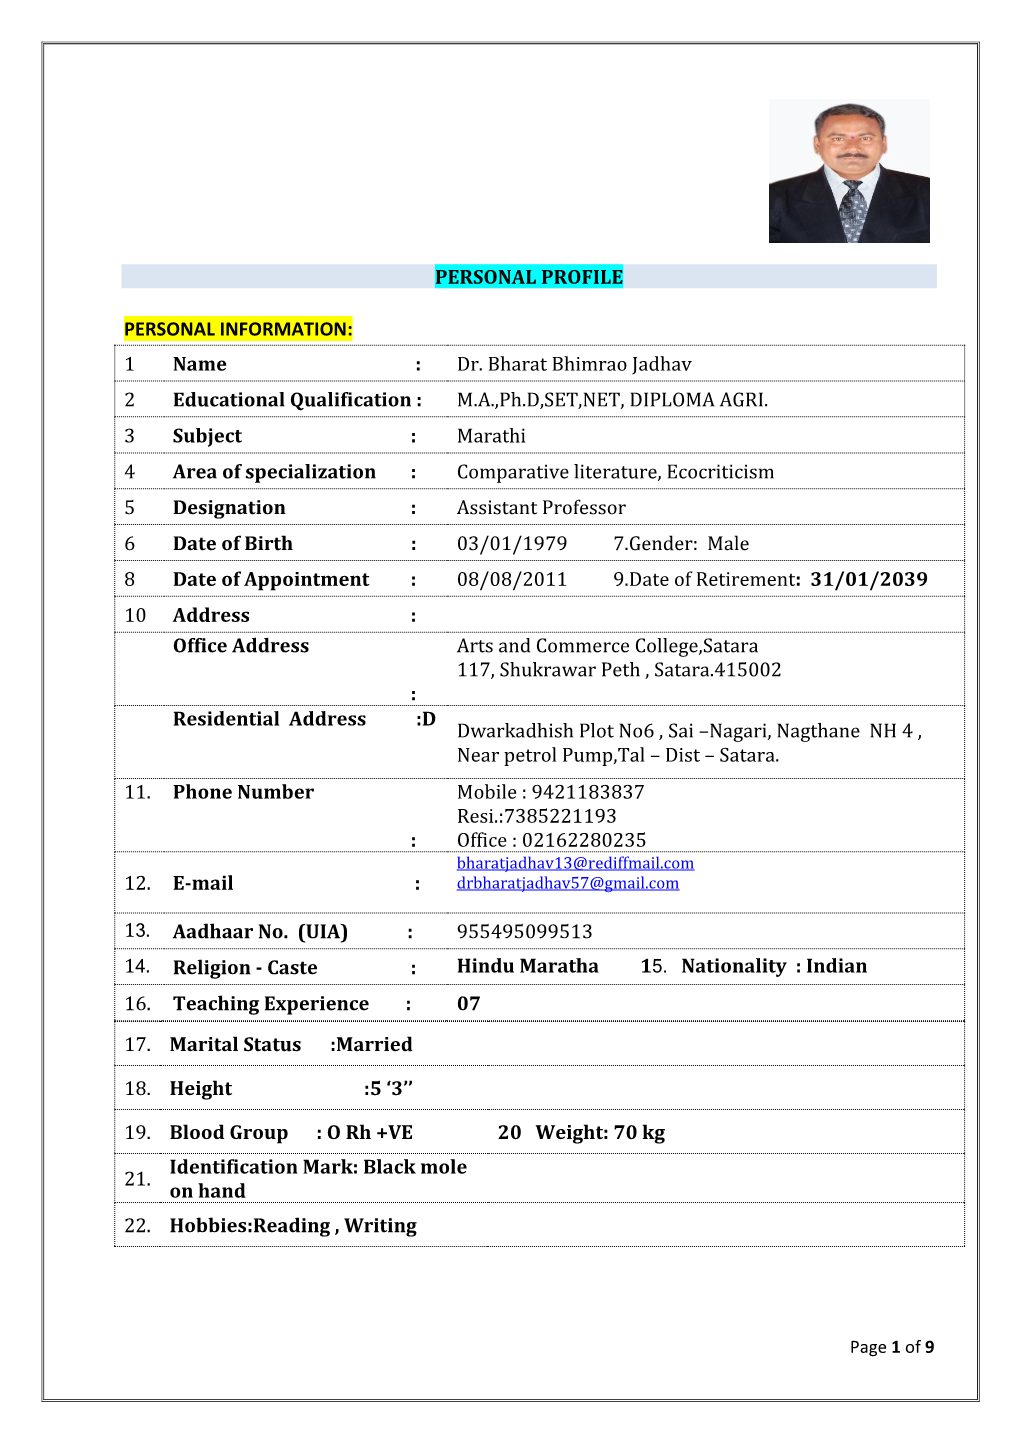 1 Name : Dr. Bharat Bhimrao Jadhav 2 Educational Qualification : M.A.,Ph.D,SET,NET, DIPLOMA AGRI